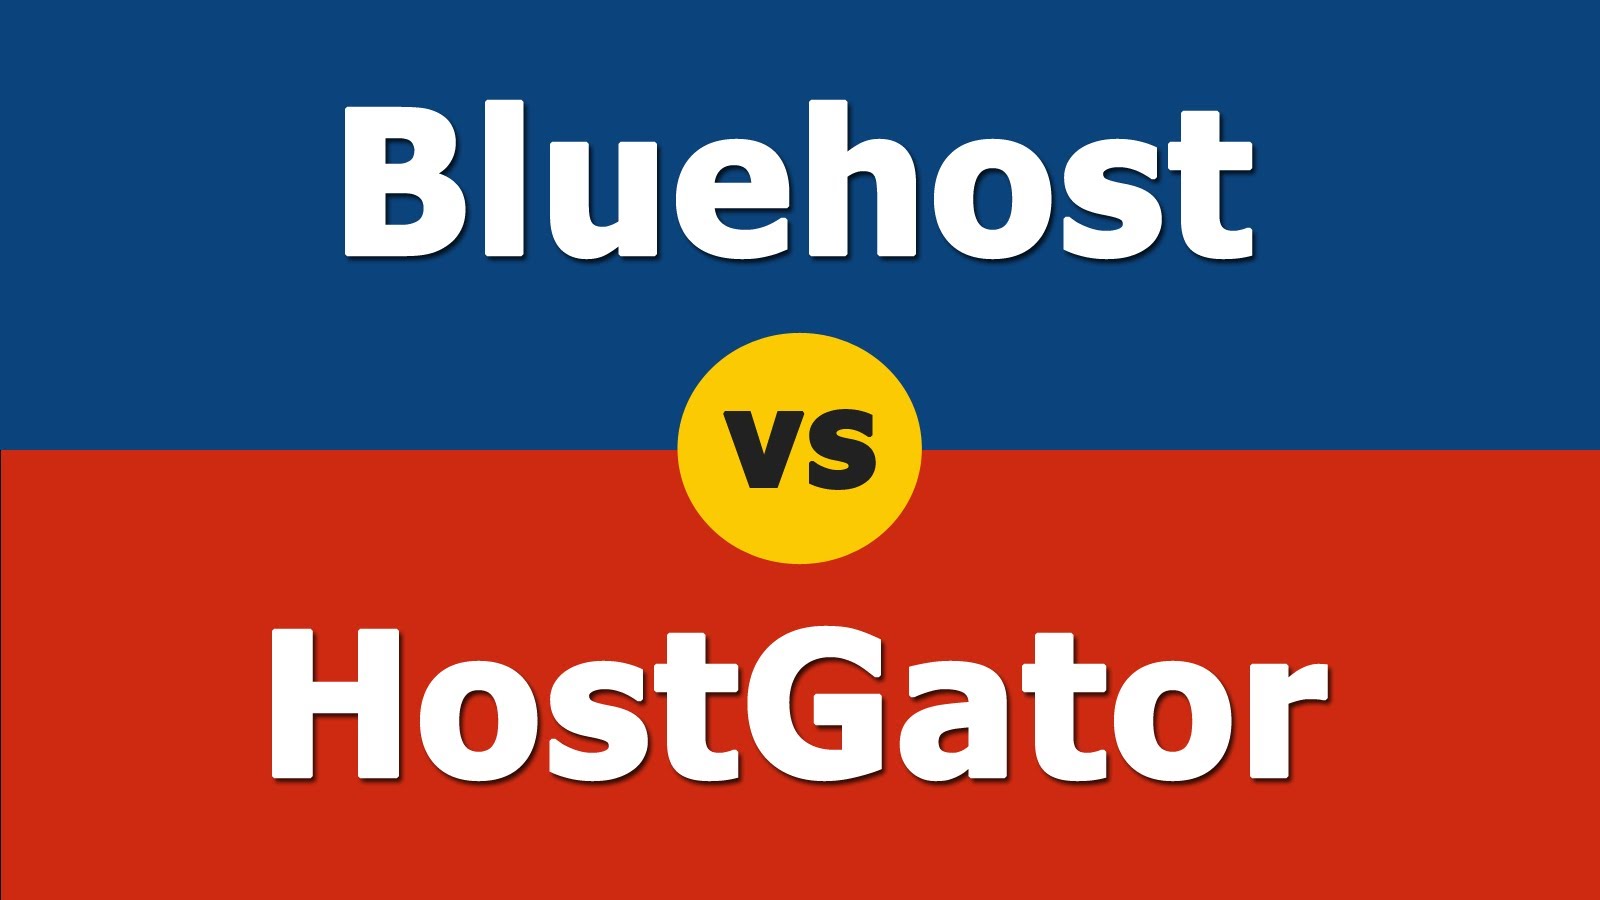 HostGator Vs. Bluehost